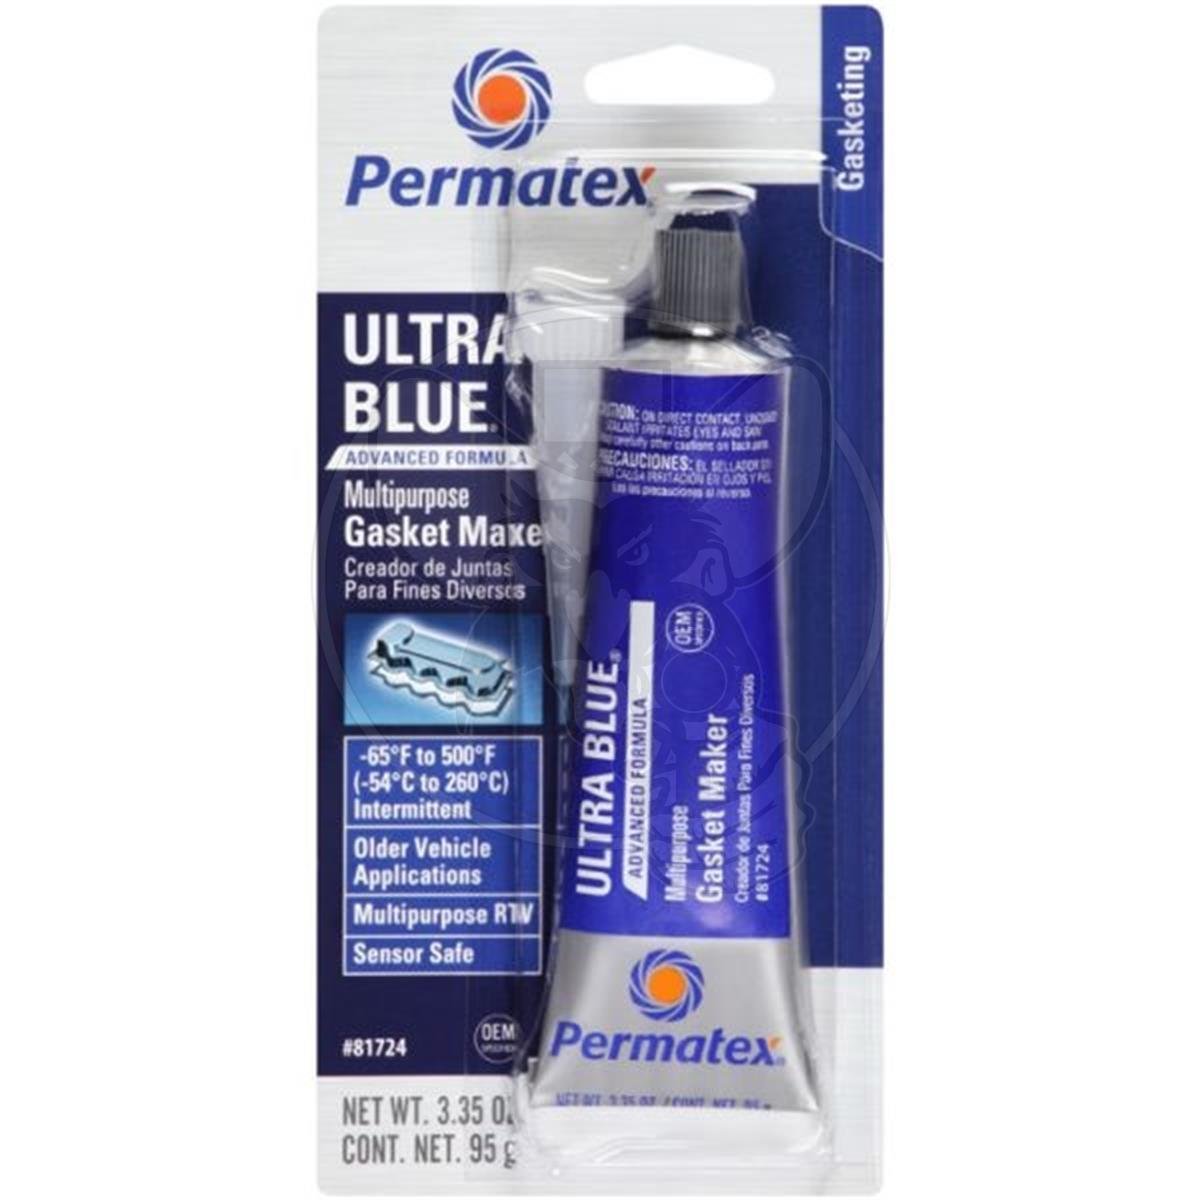 PERMATEX ULTRA BLUE RTV SILICONE GASKET MAKER SENSOR-SAFE 95G TUBE